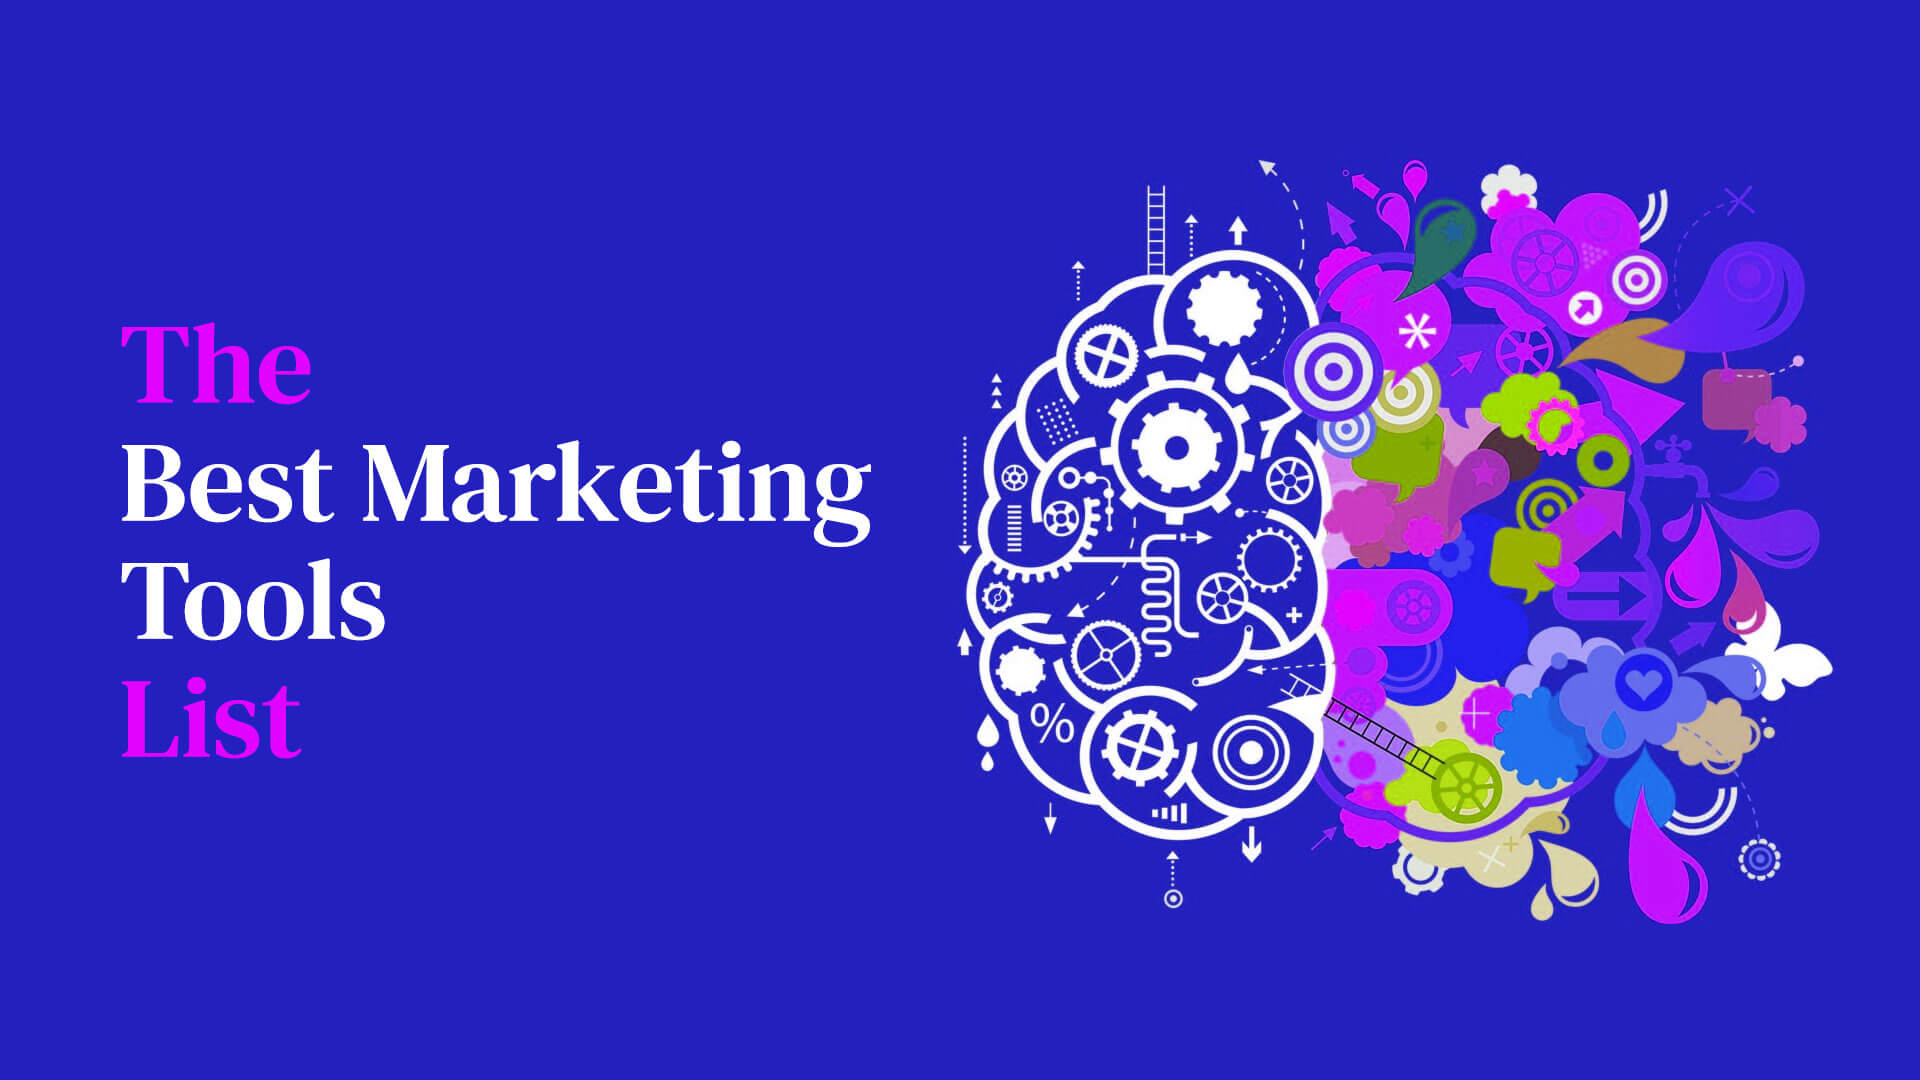 Lead Monkey Marketing: Your Partner in Digital Success